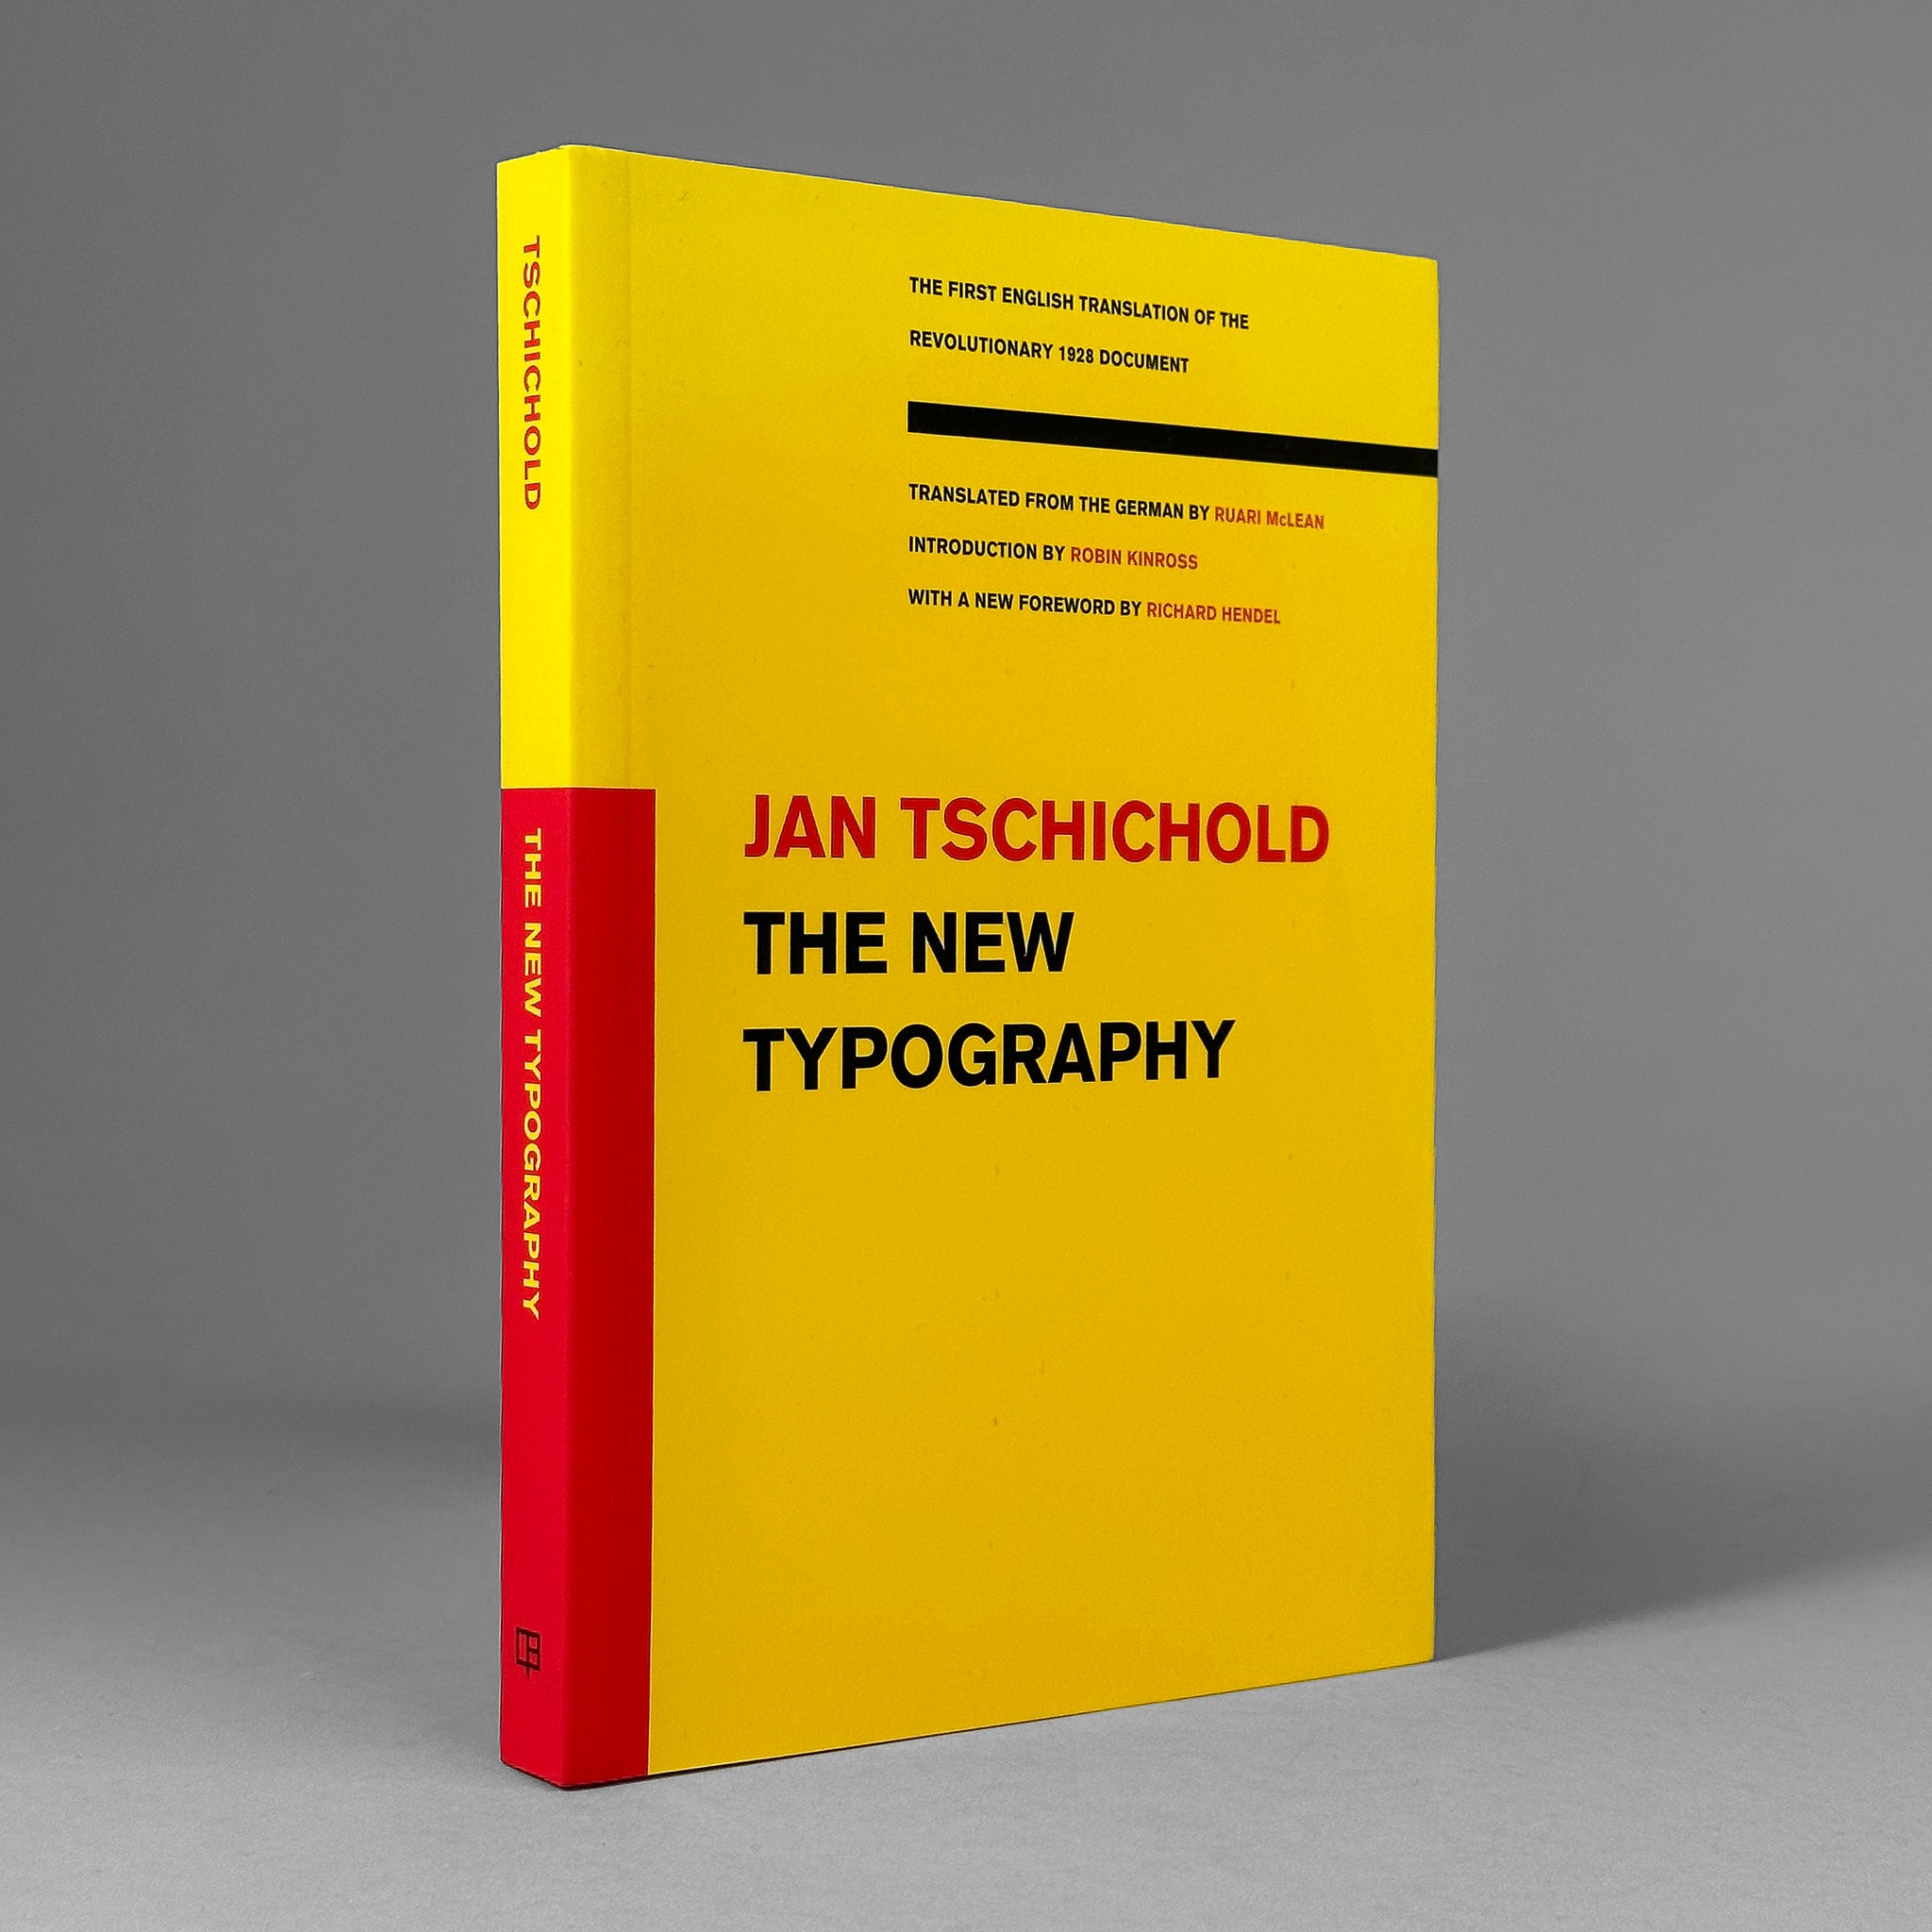 The New Typography [Die neue Typographie]